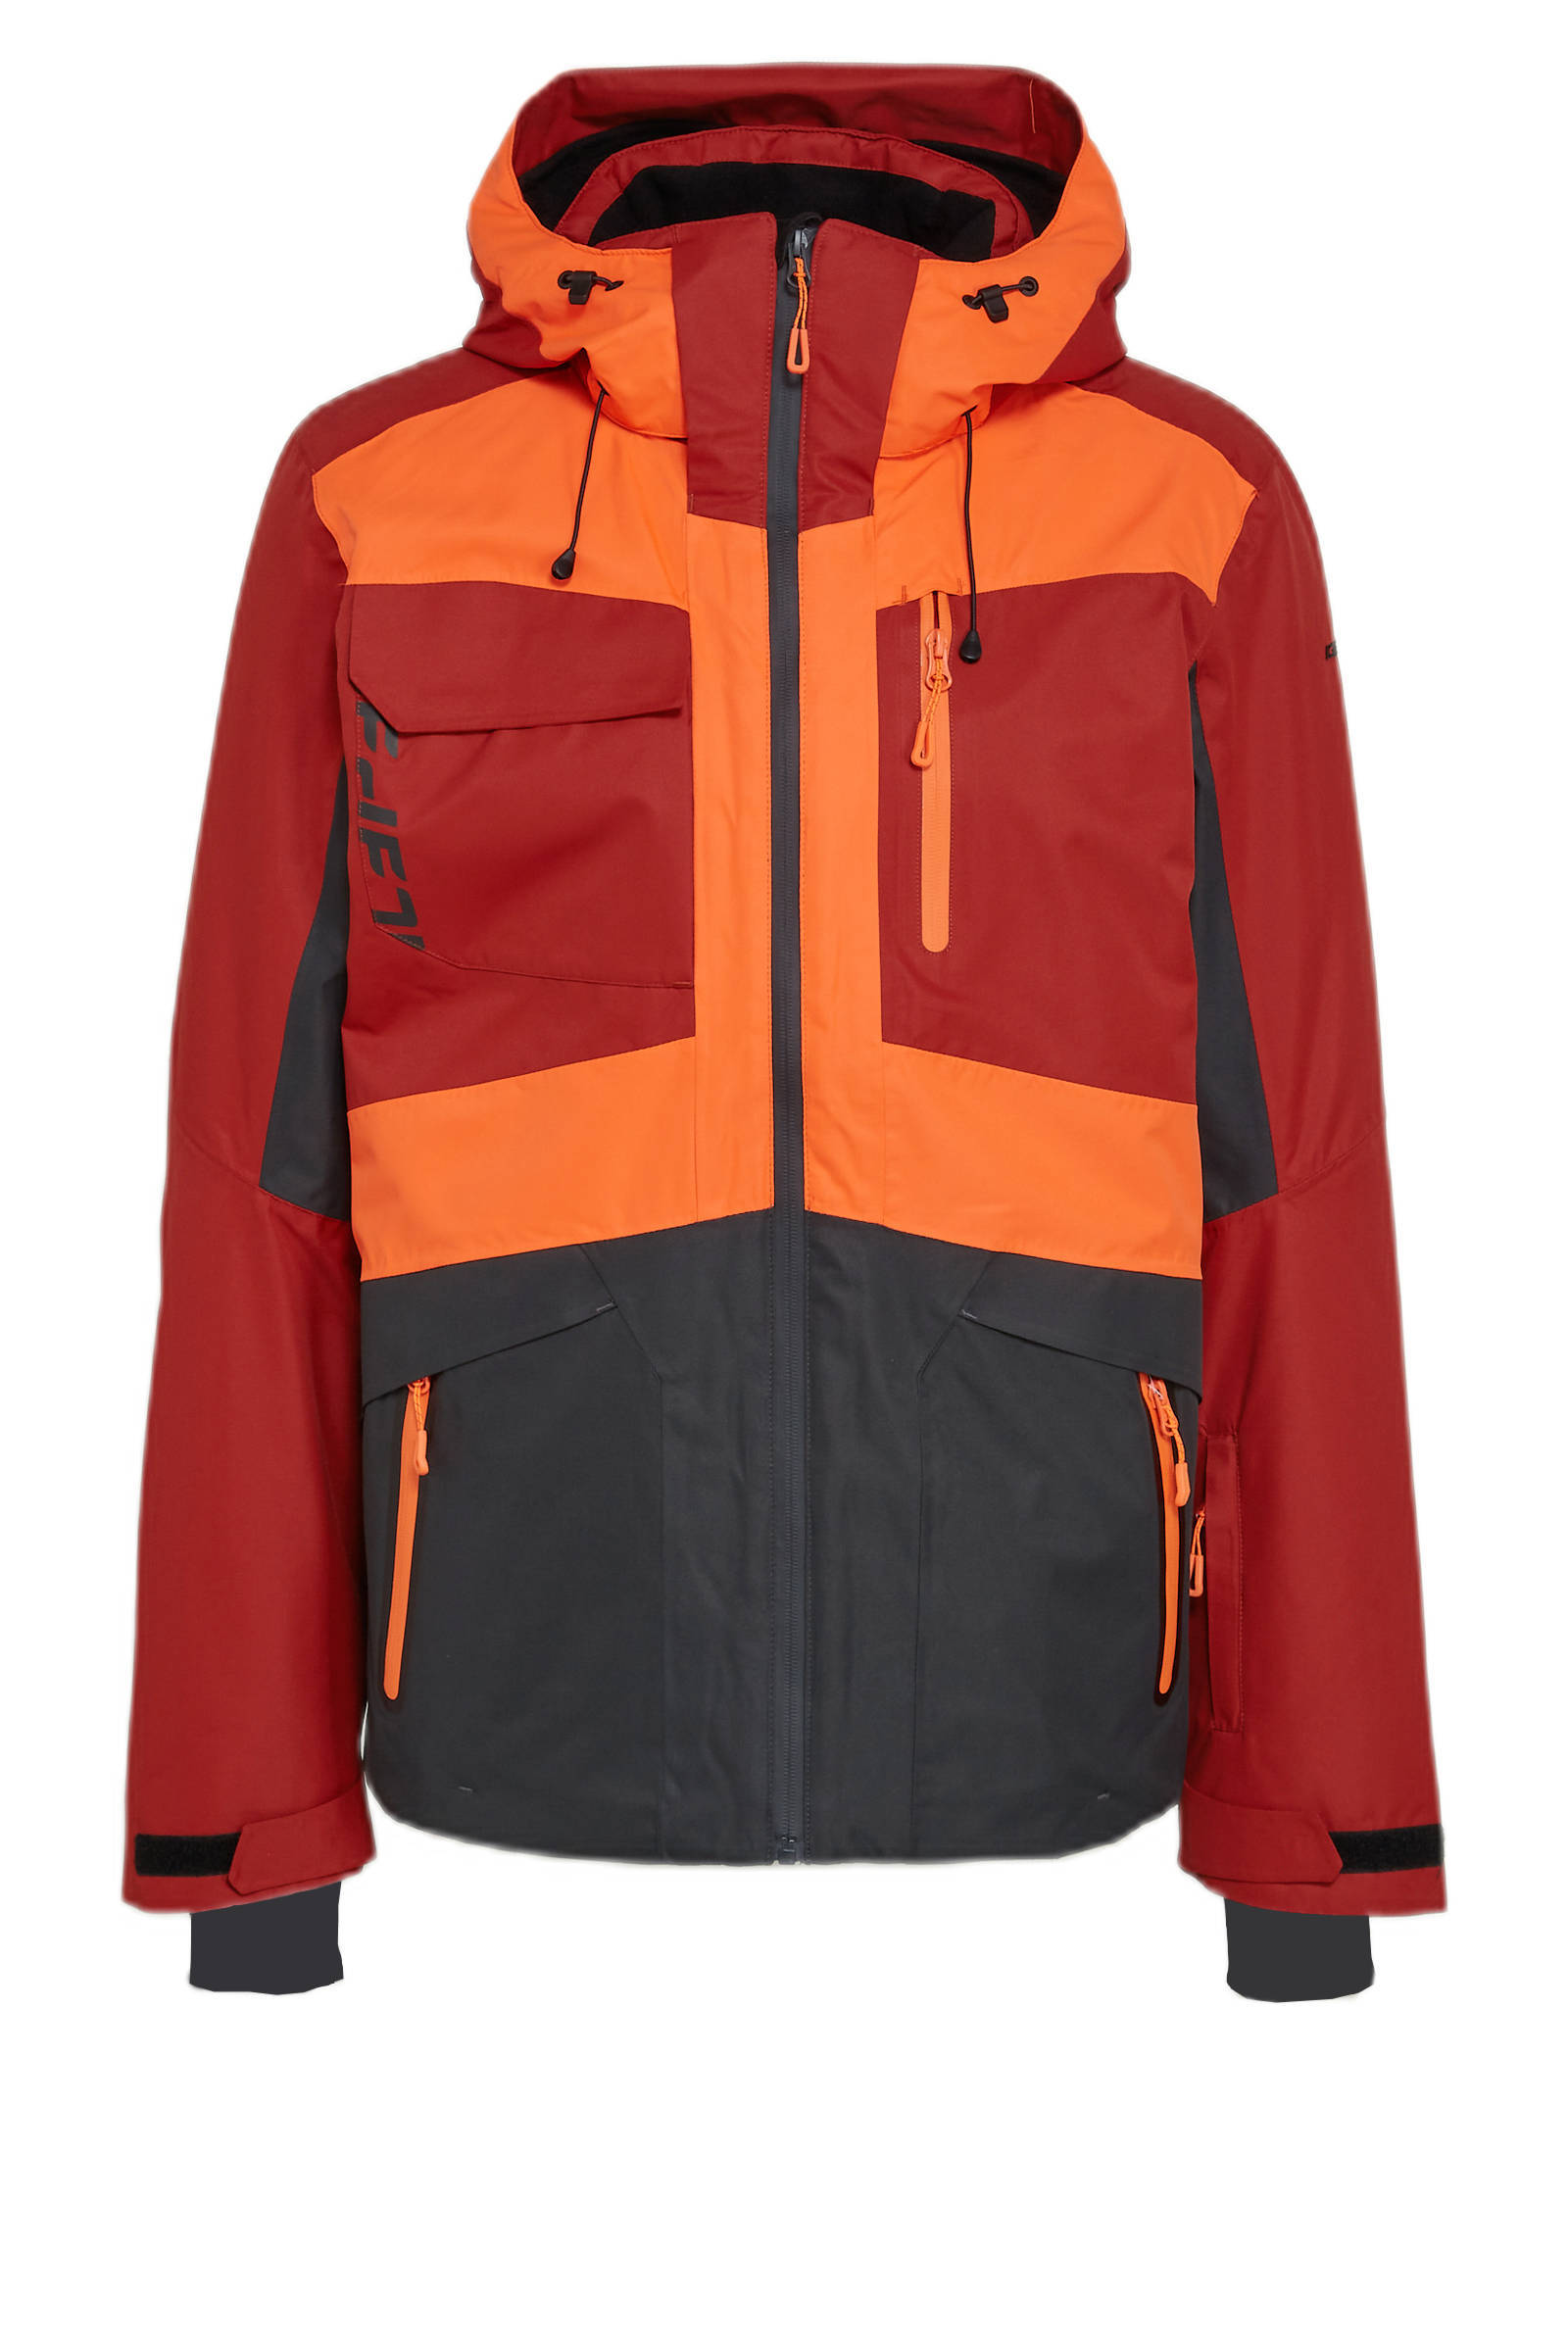 Icepeak ski jack Crossett oranje/rood/zwart online kopen